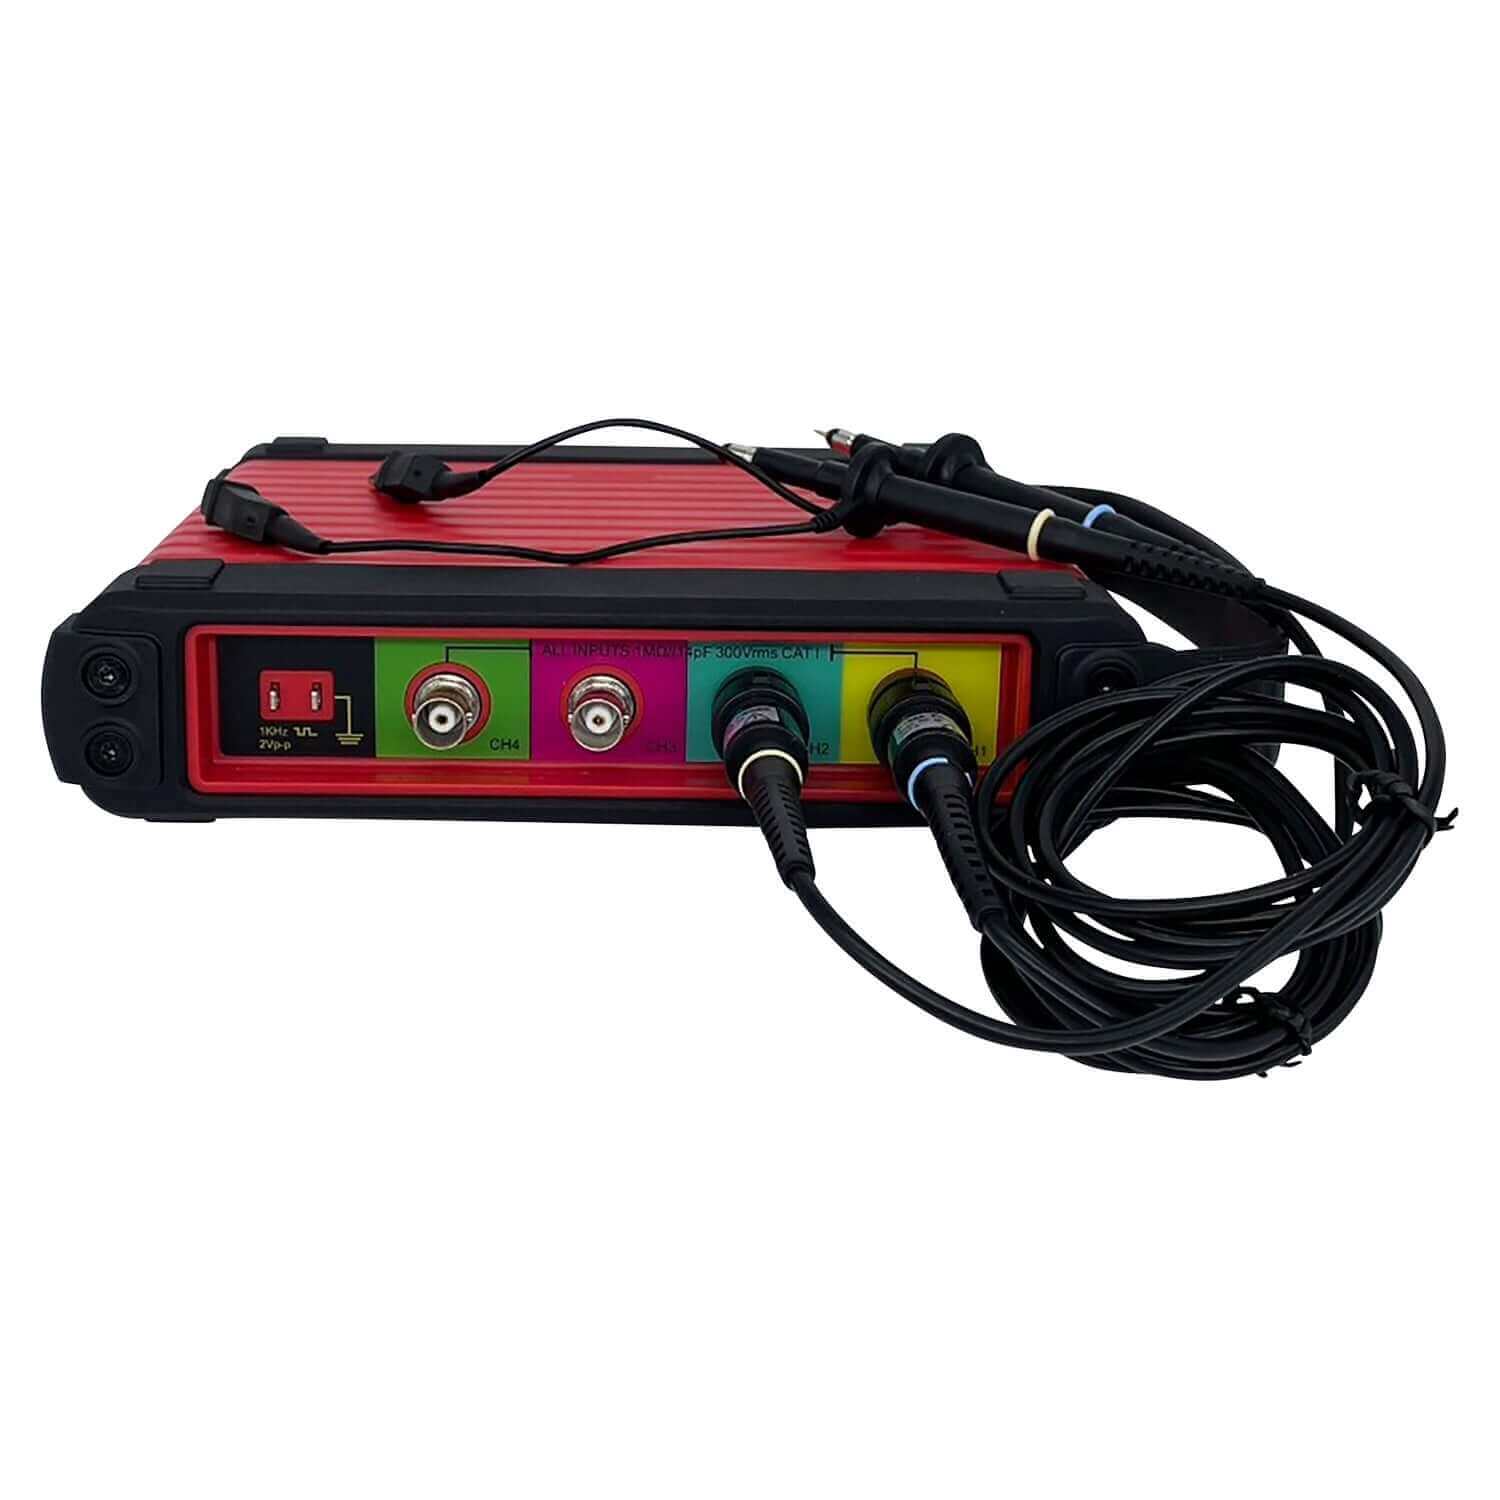 THINKCAR® 4 Channel Oscilloscope Scope Box 100MHz Bandwidth Vehicle Diagnostic Equipment Tool